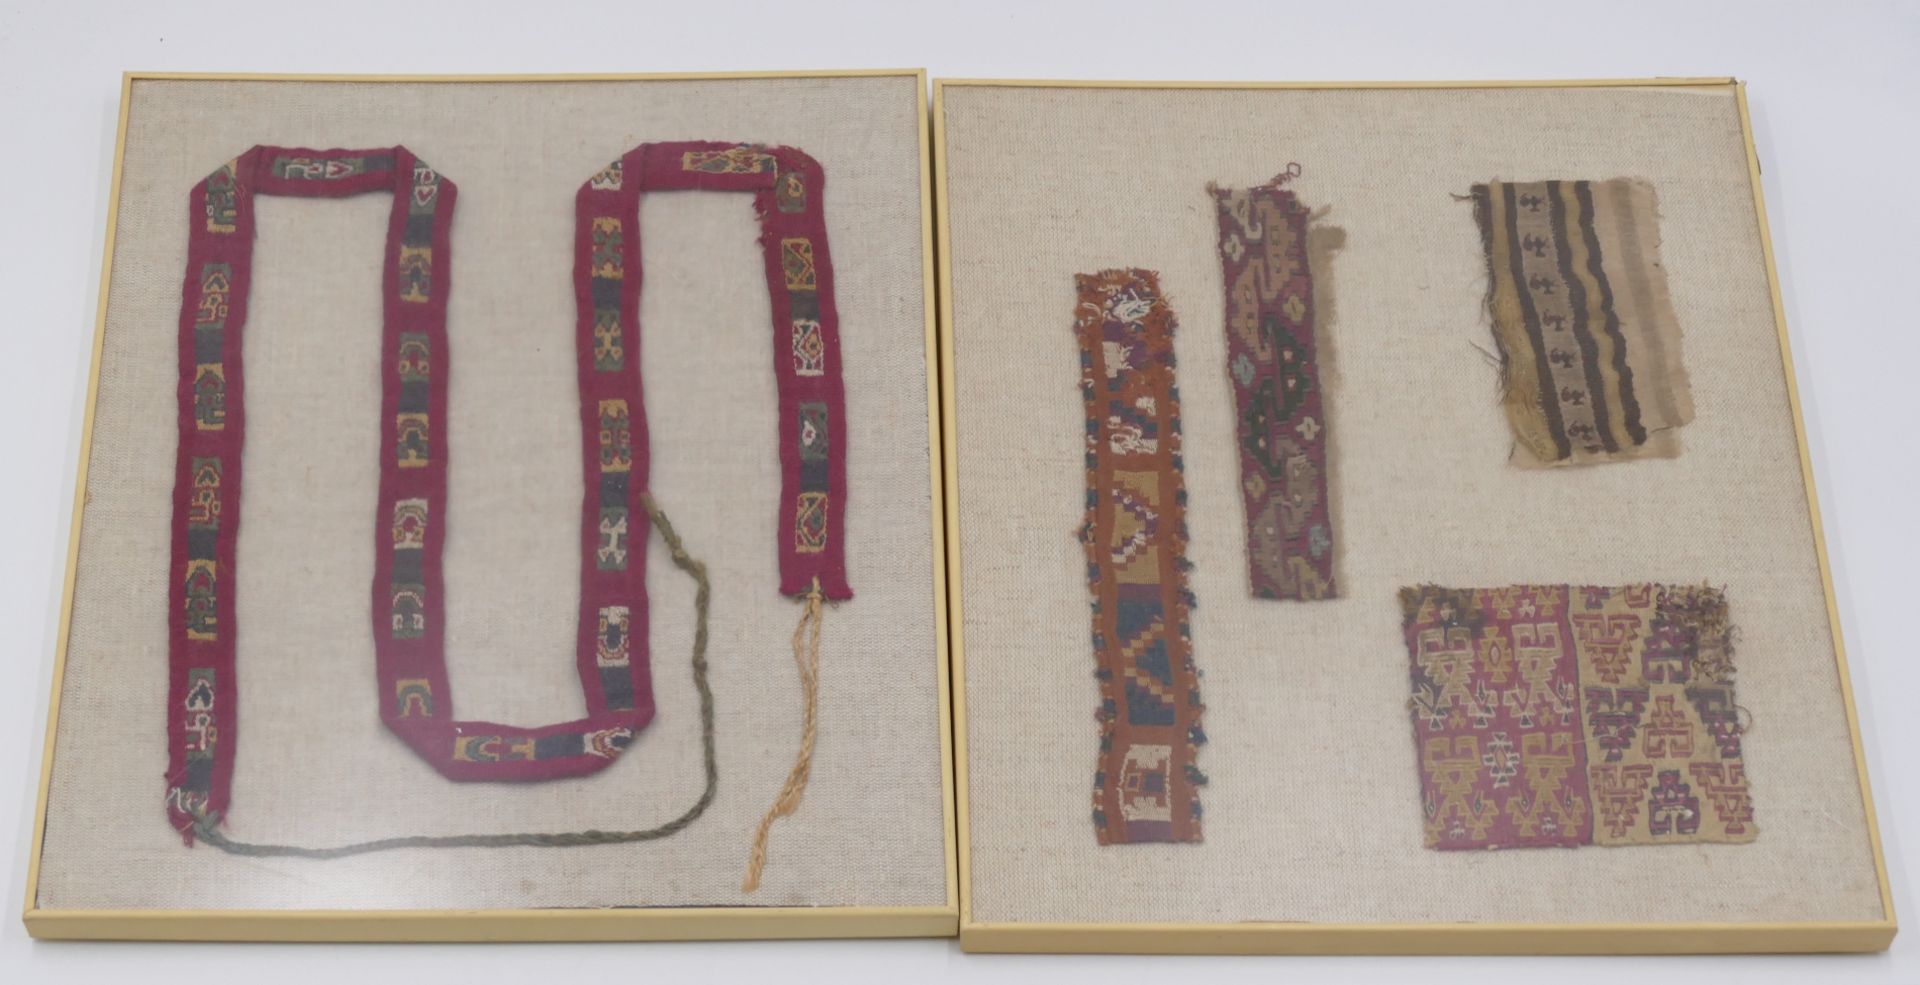 1 Konvolut Textilfragmente/Stoffe lt. El. wohl Peru (Paracas Nazca) wohl 14./15. Jh. u. nztl., - Image 3 of 4